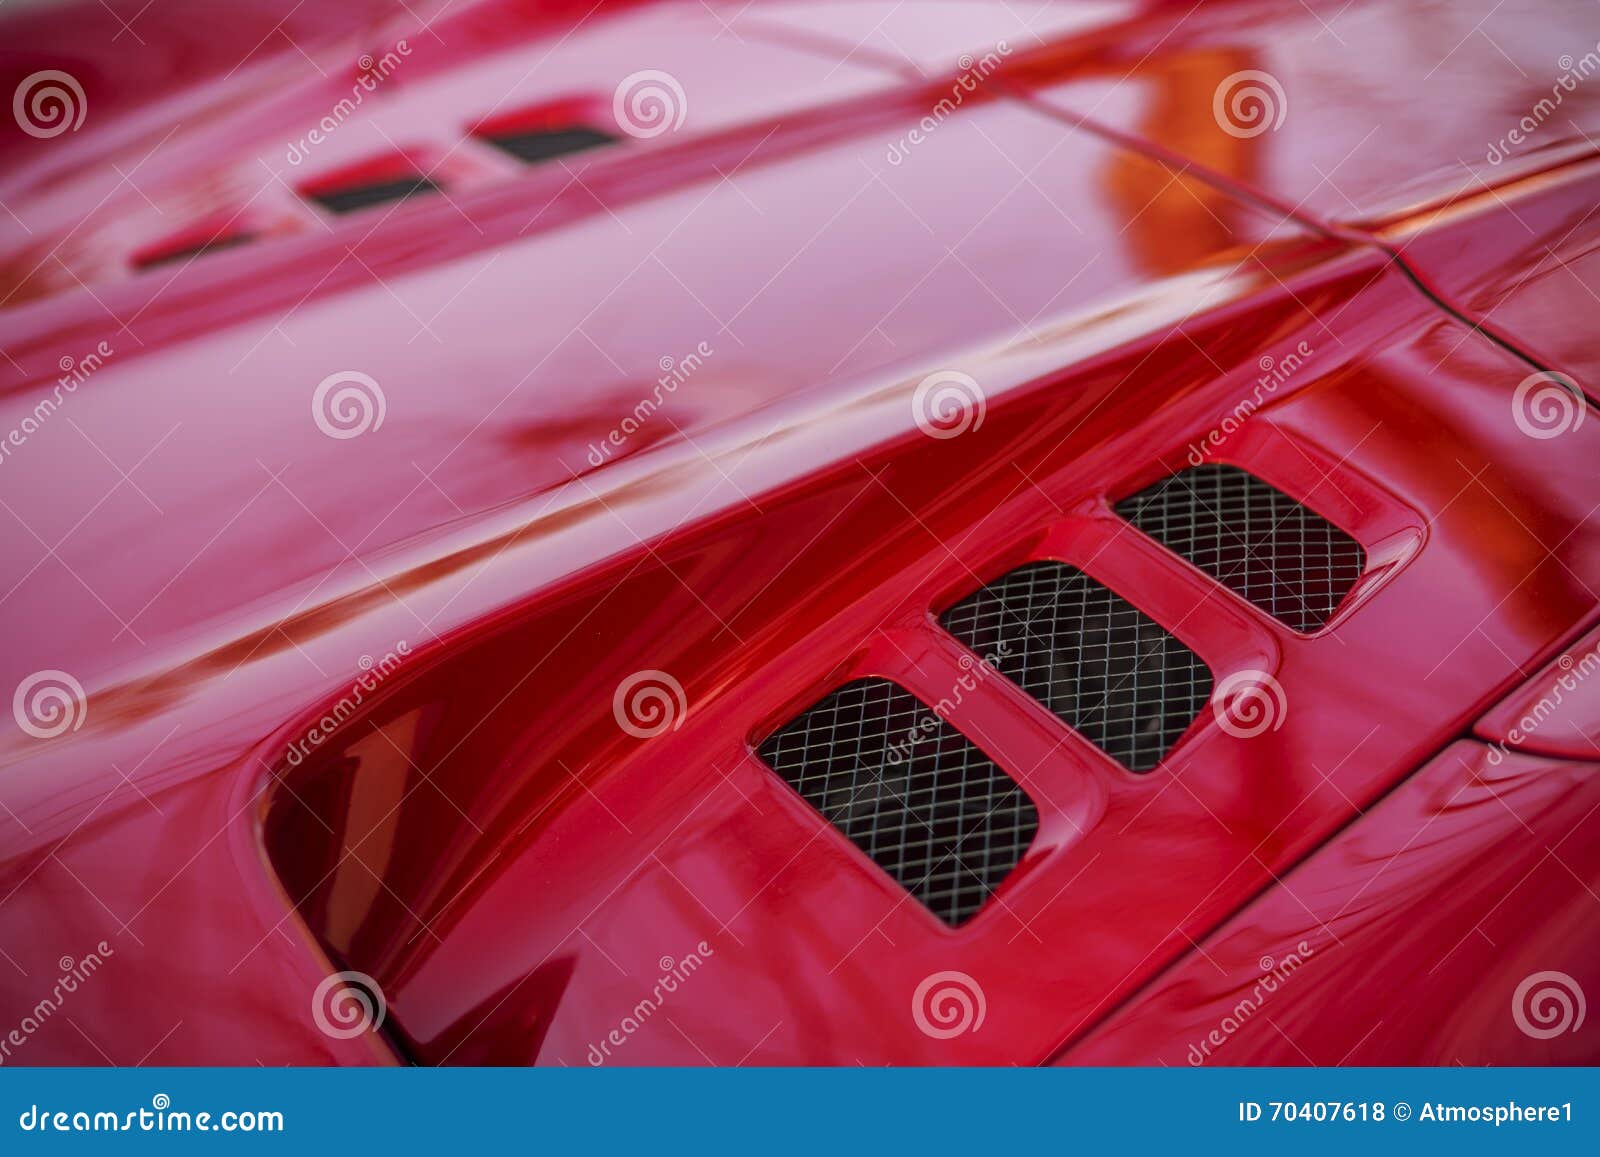 detail of red super-sport car vents on a bonnet